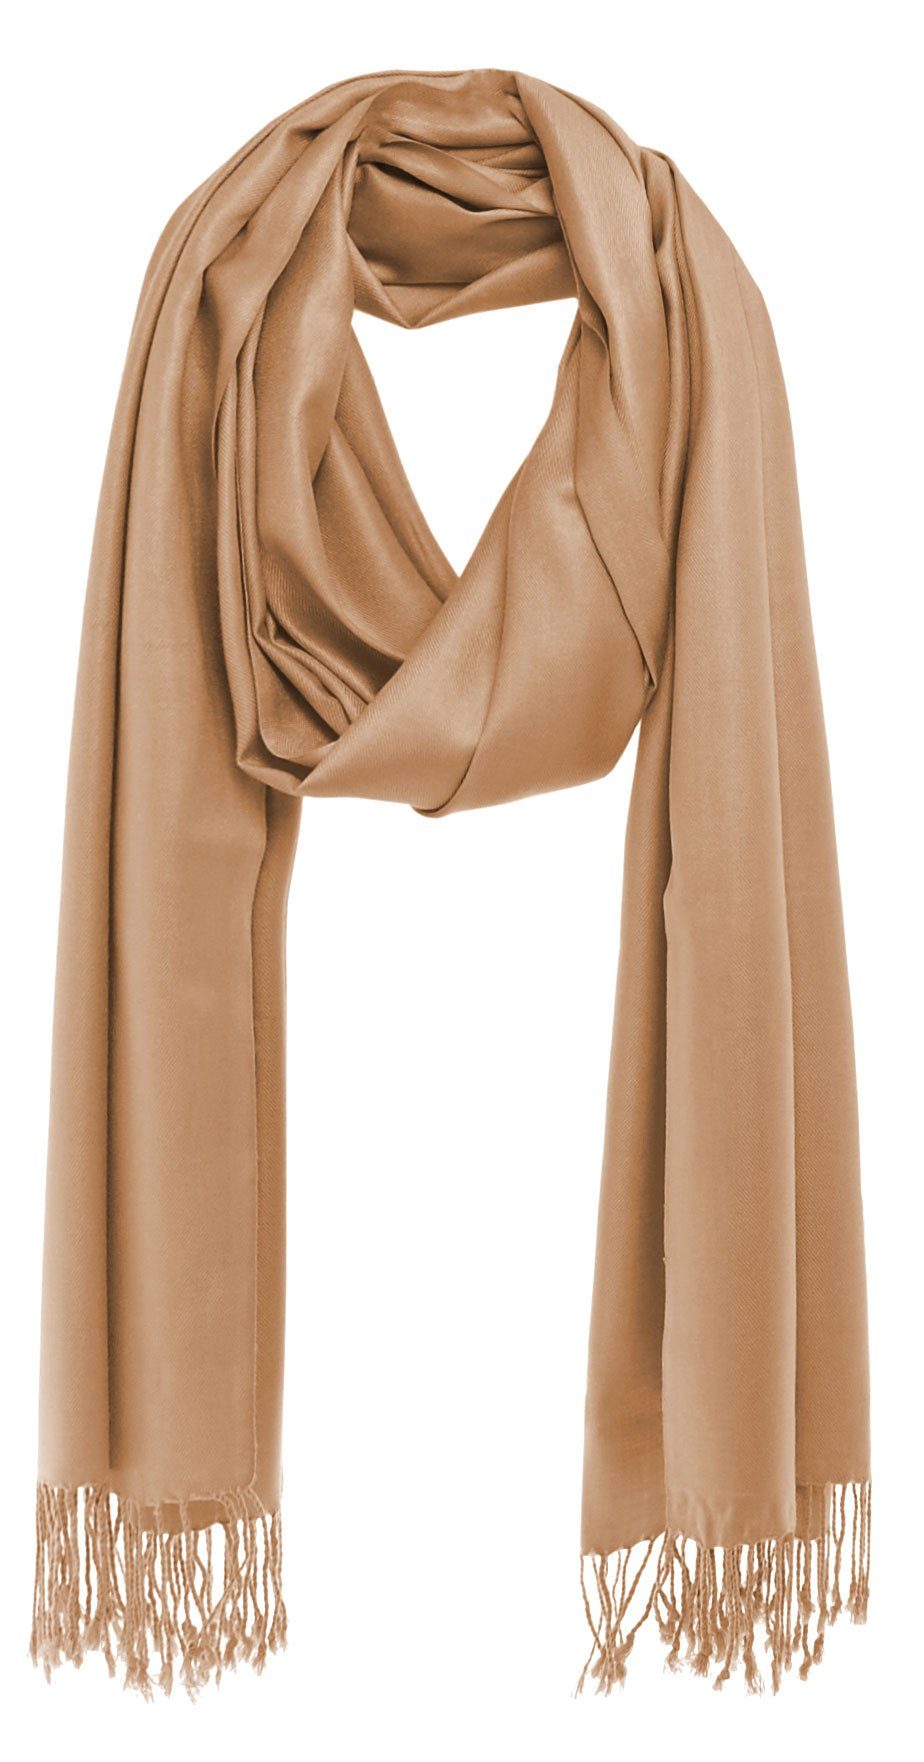 Premium Seide - XL glänzend Viskose cm Kaschmir 100% Damen-Schal aus weich Bovari wie - wie 200x70 -, Schal camel Pashmina